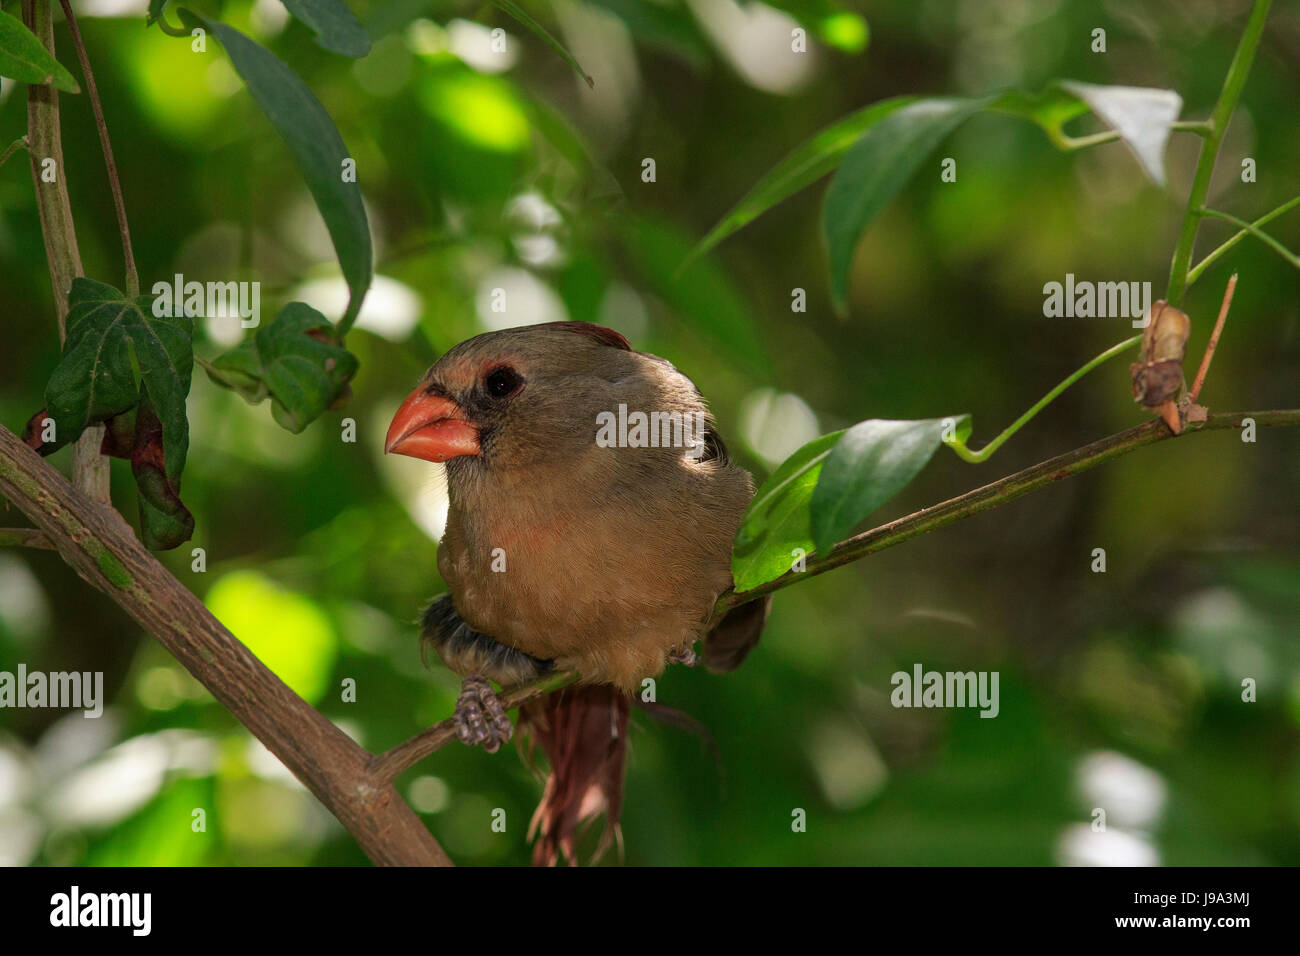 Pyrrhuloxia or desert cardinal (Cardinalis sinuatus) perched on tree branch, Stock Photo